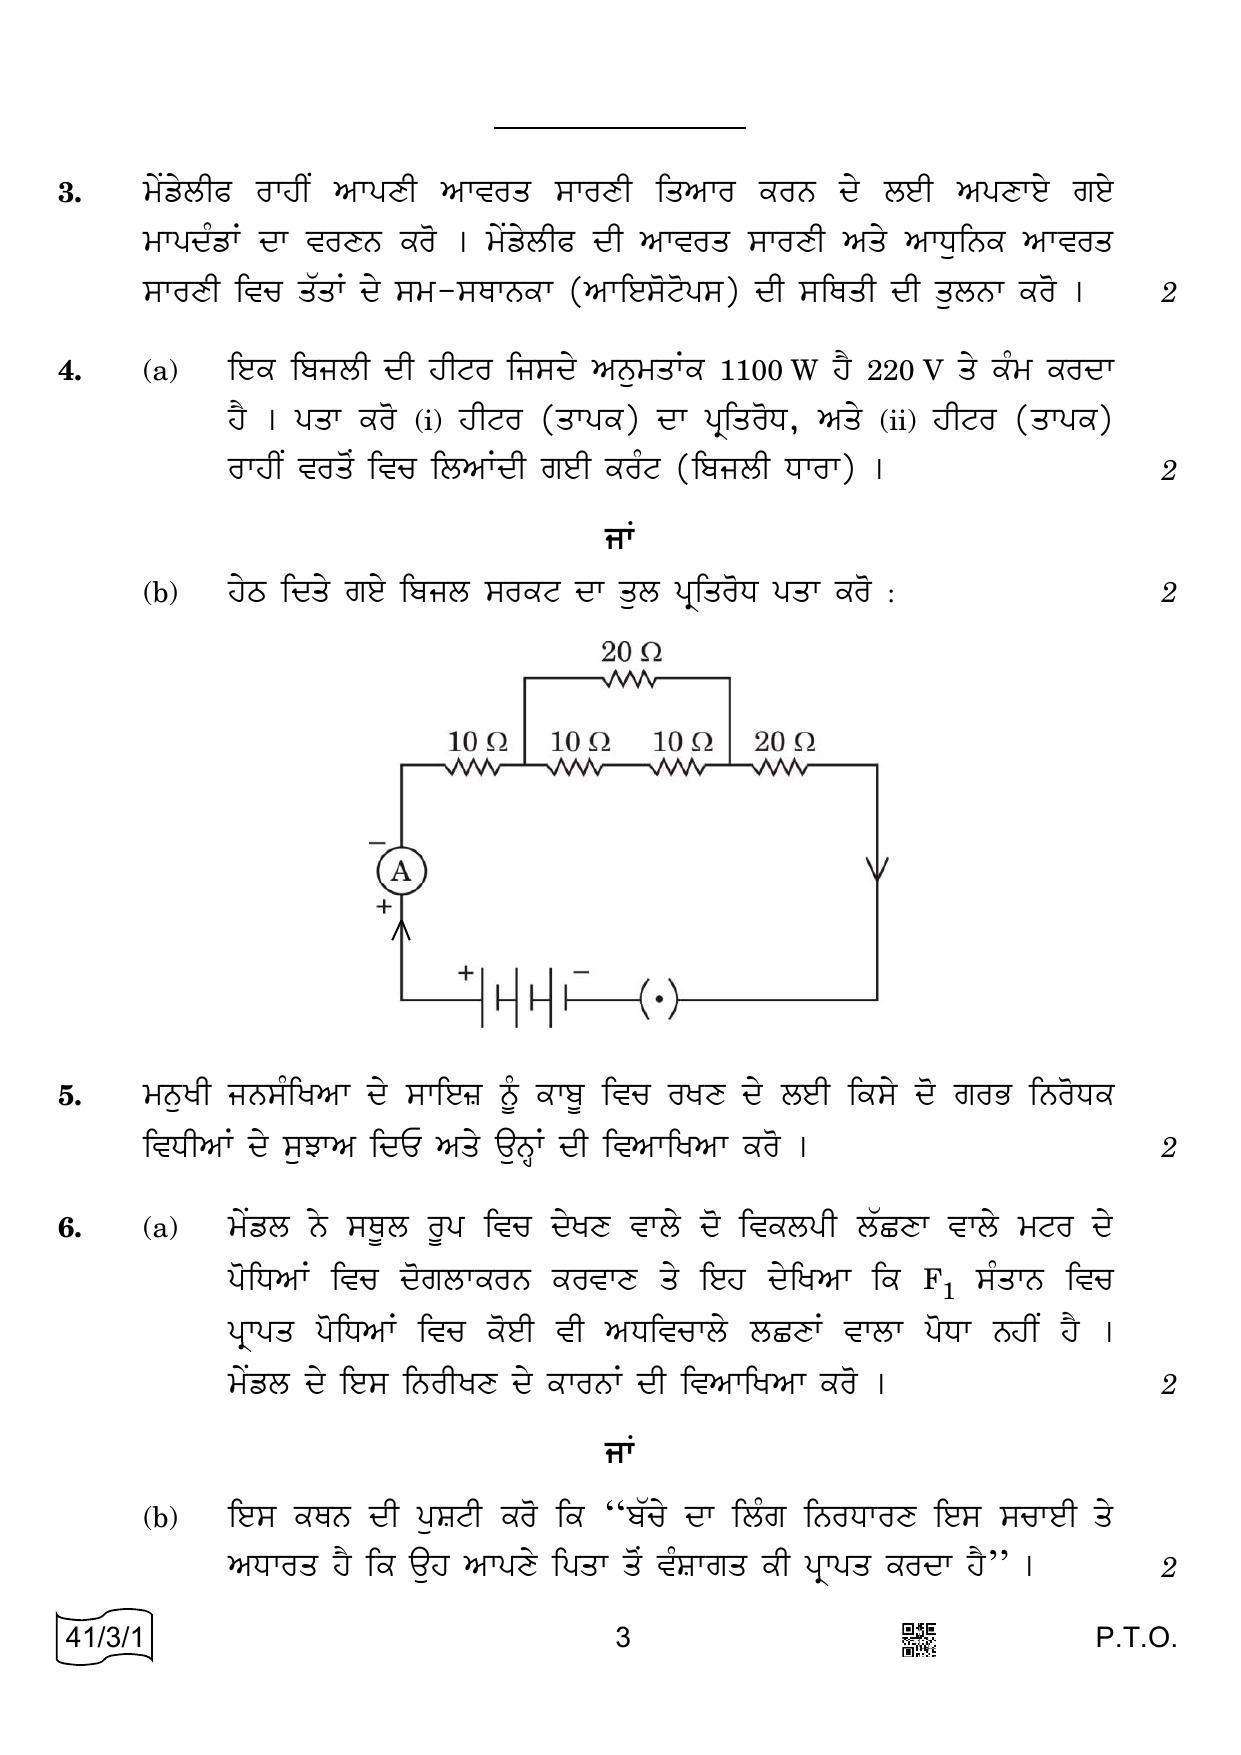 CBSE Class 10 41-3-1 Science Punjabi Version 2022 Question Paper - Page 3